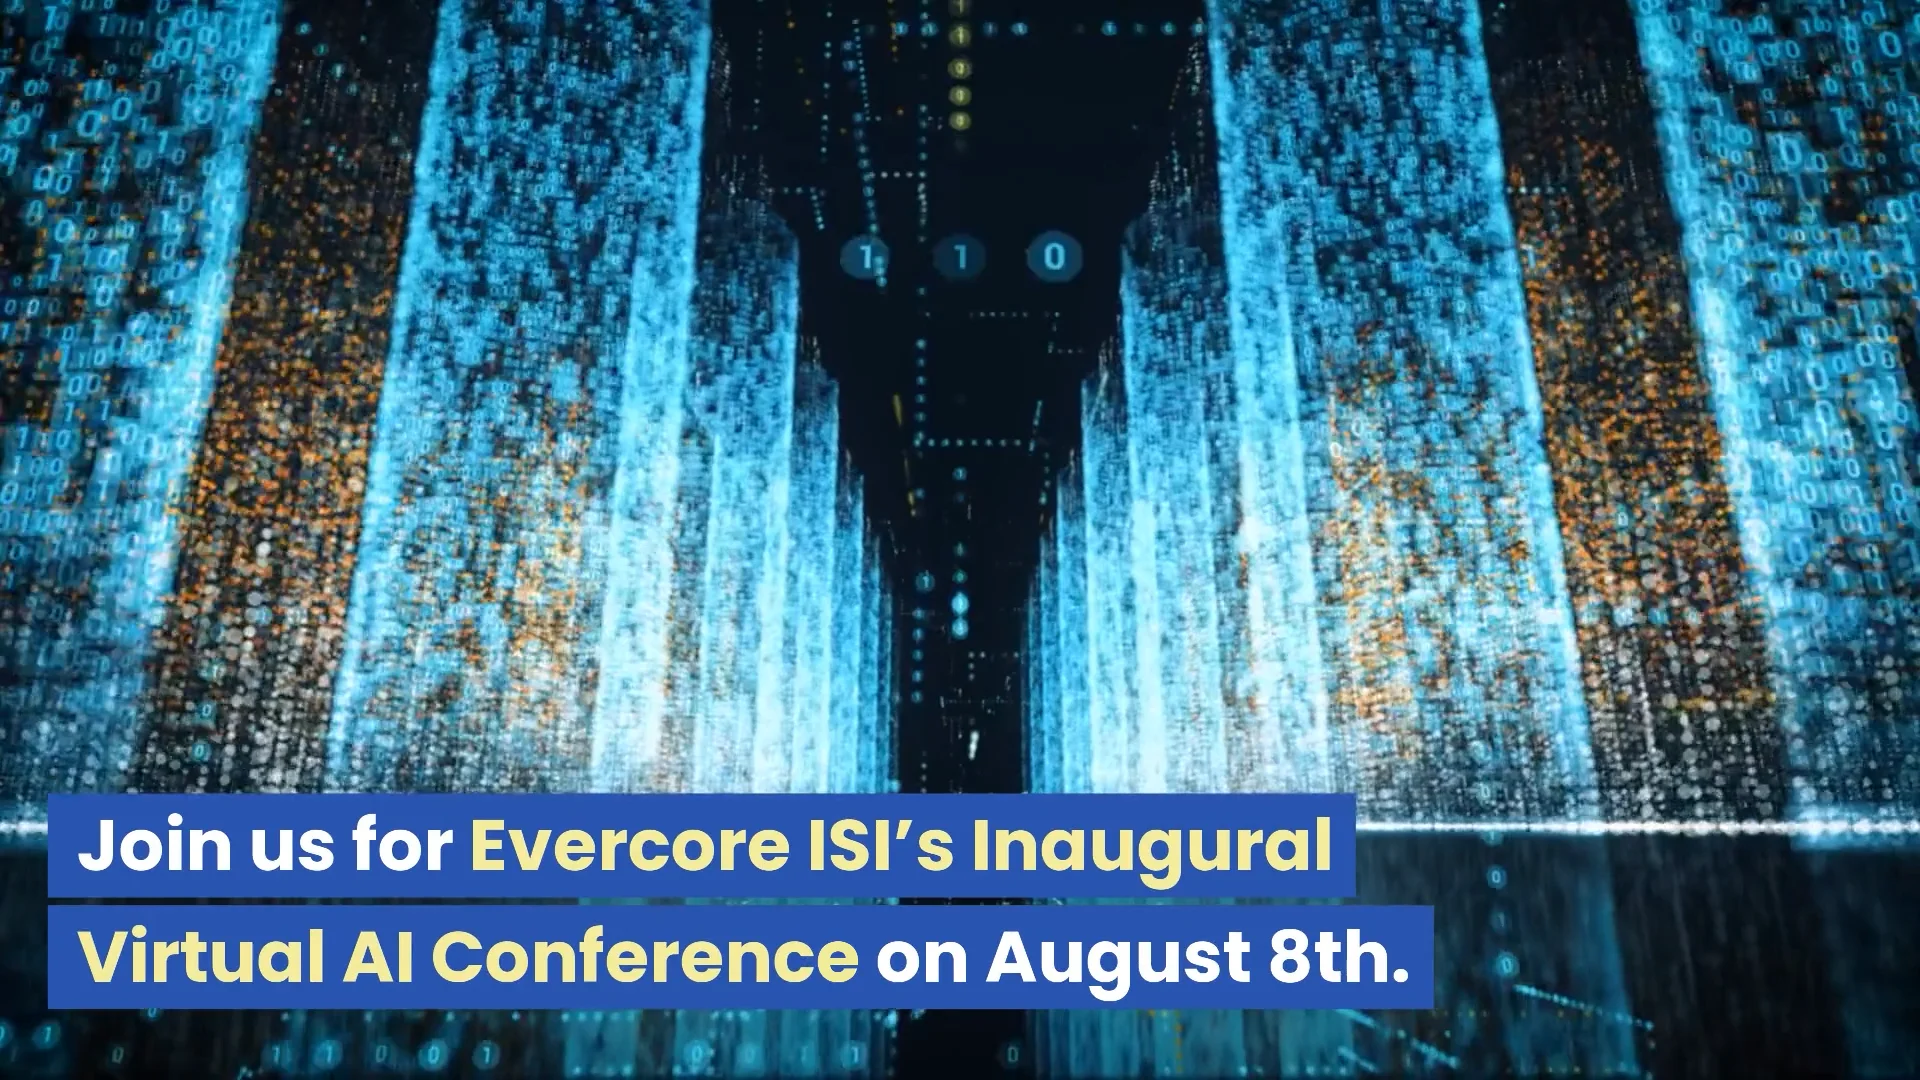 Evercore ISI Virtual AI Conference on Vimeo